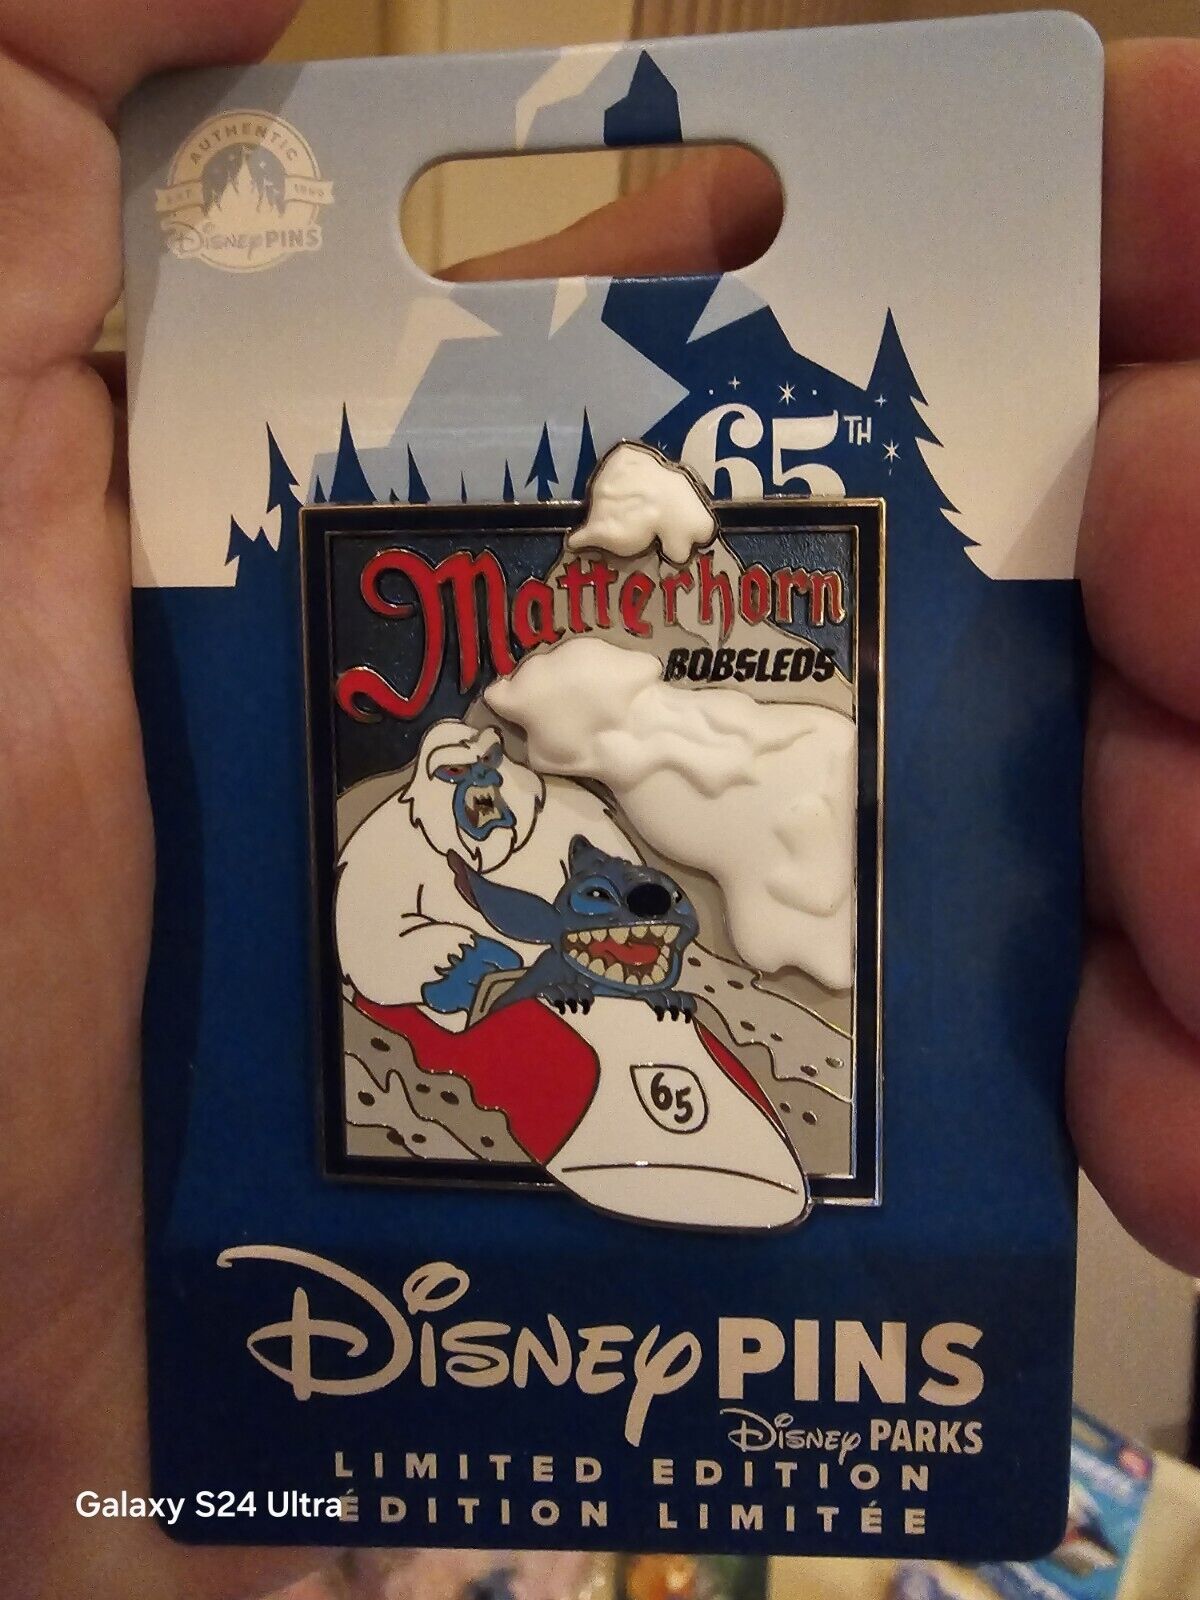 Disney disneyland matterhorn Bobsleds 65th anniversary Stitch pin